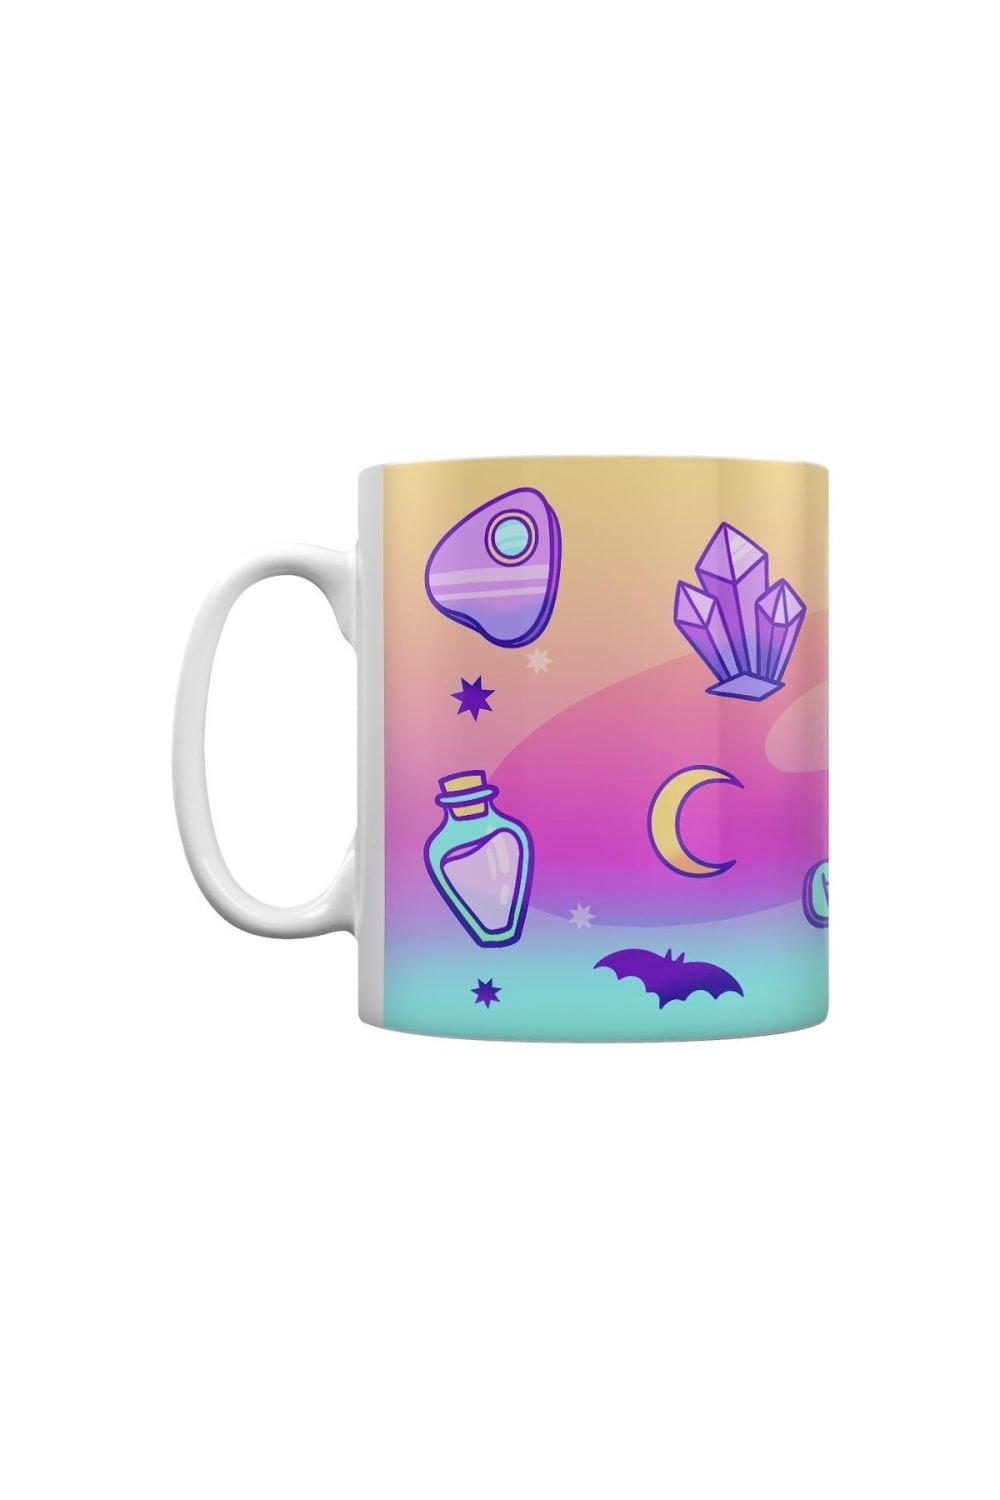 Photos - Mug / Cup Witch Pastel Goth Mug